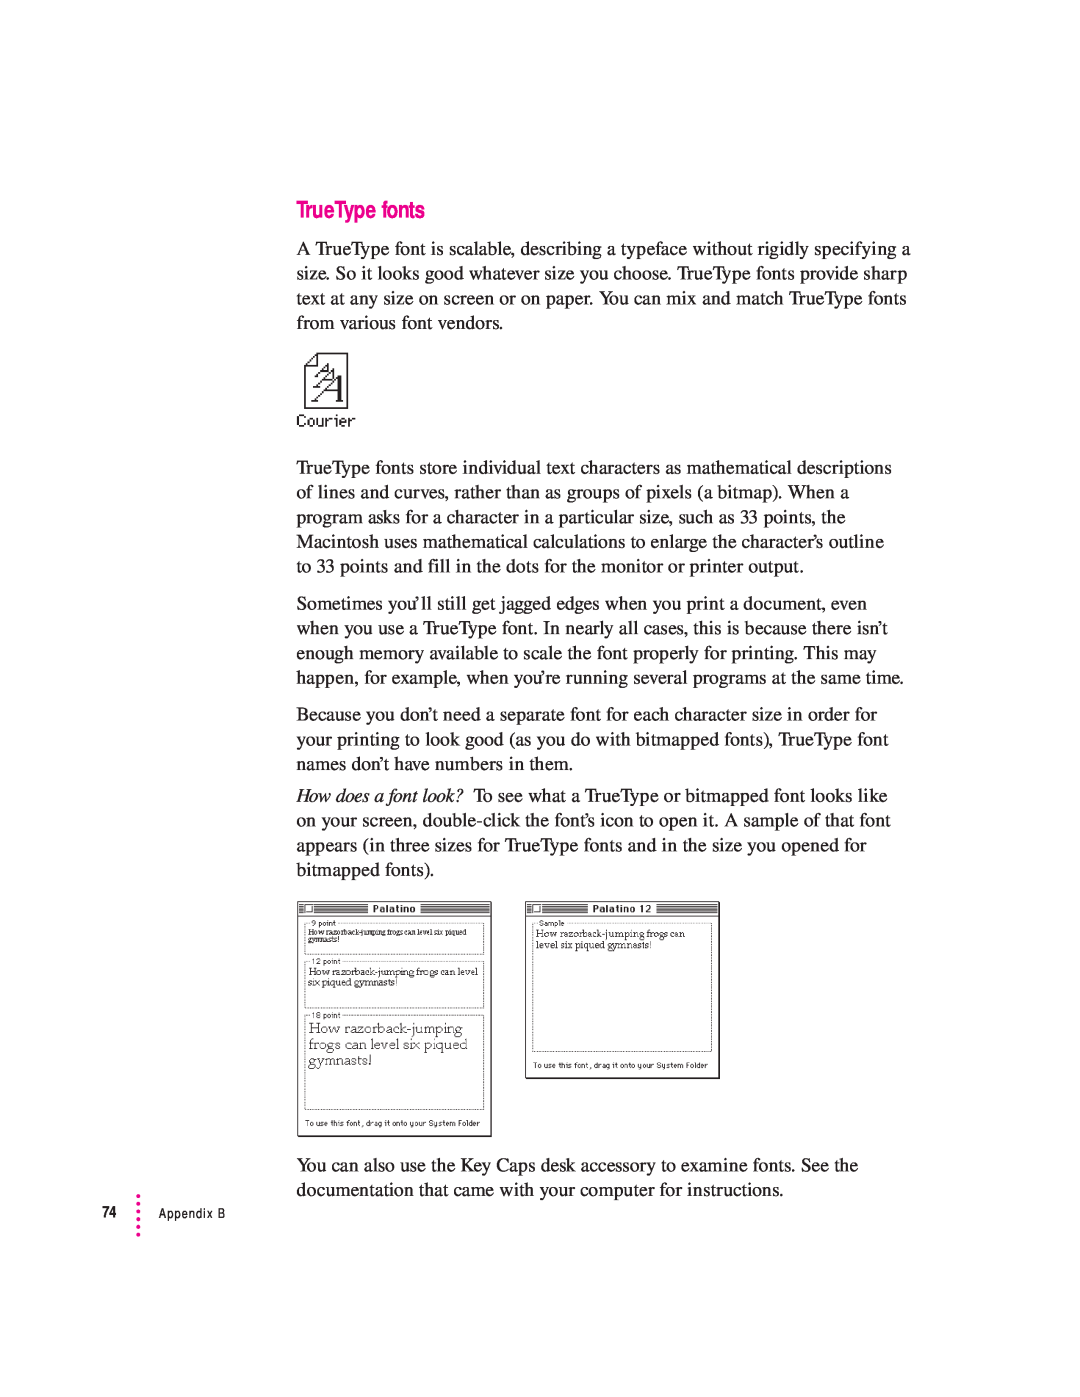 Apple 2400 manual TrueType fonts, Appendix B 